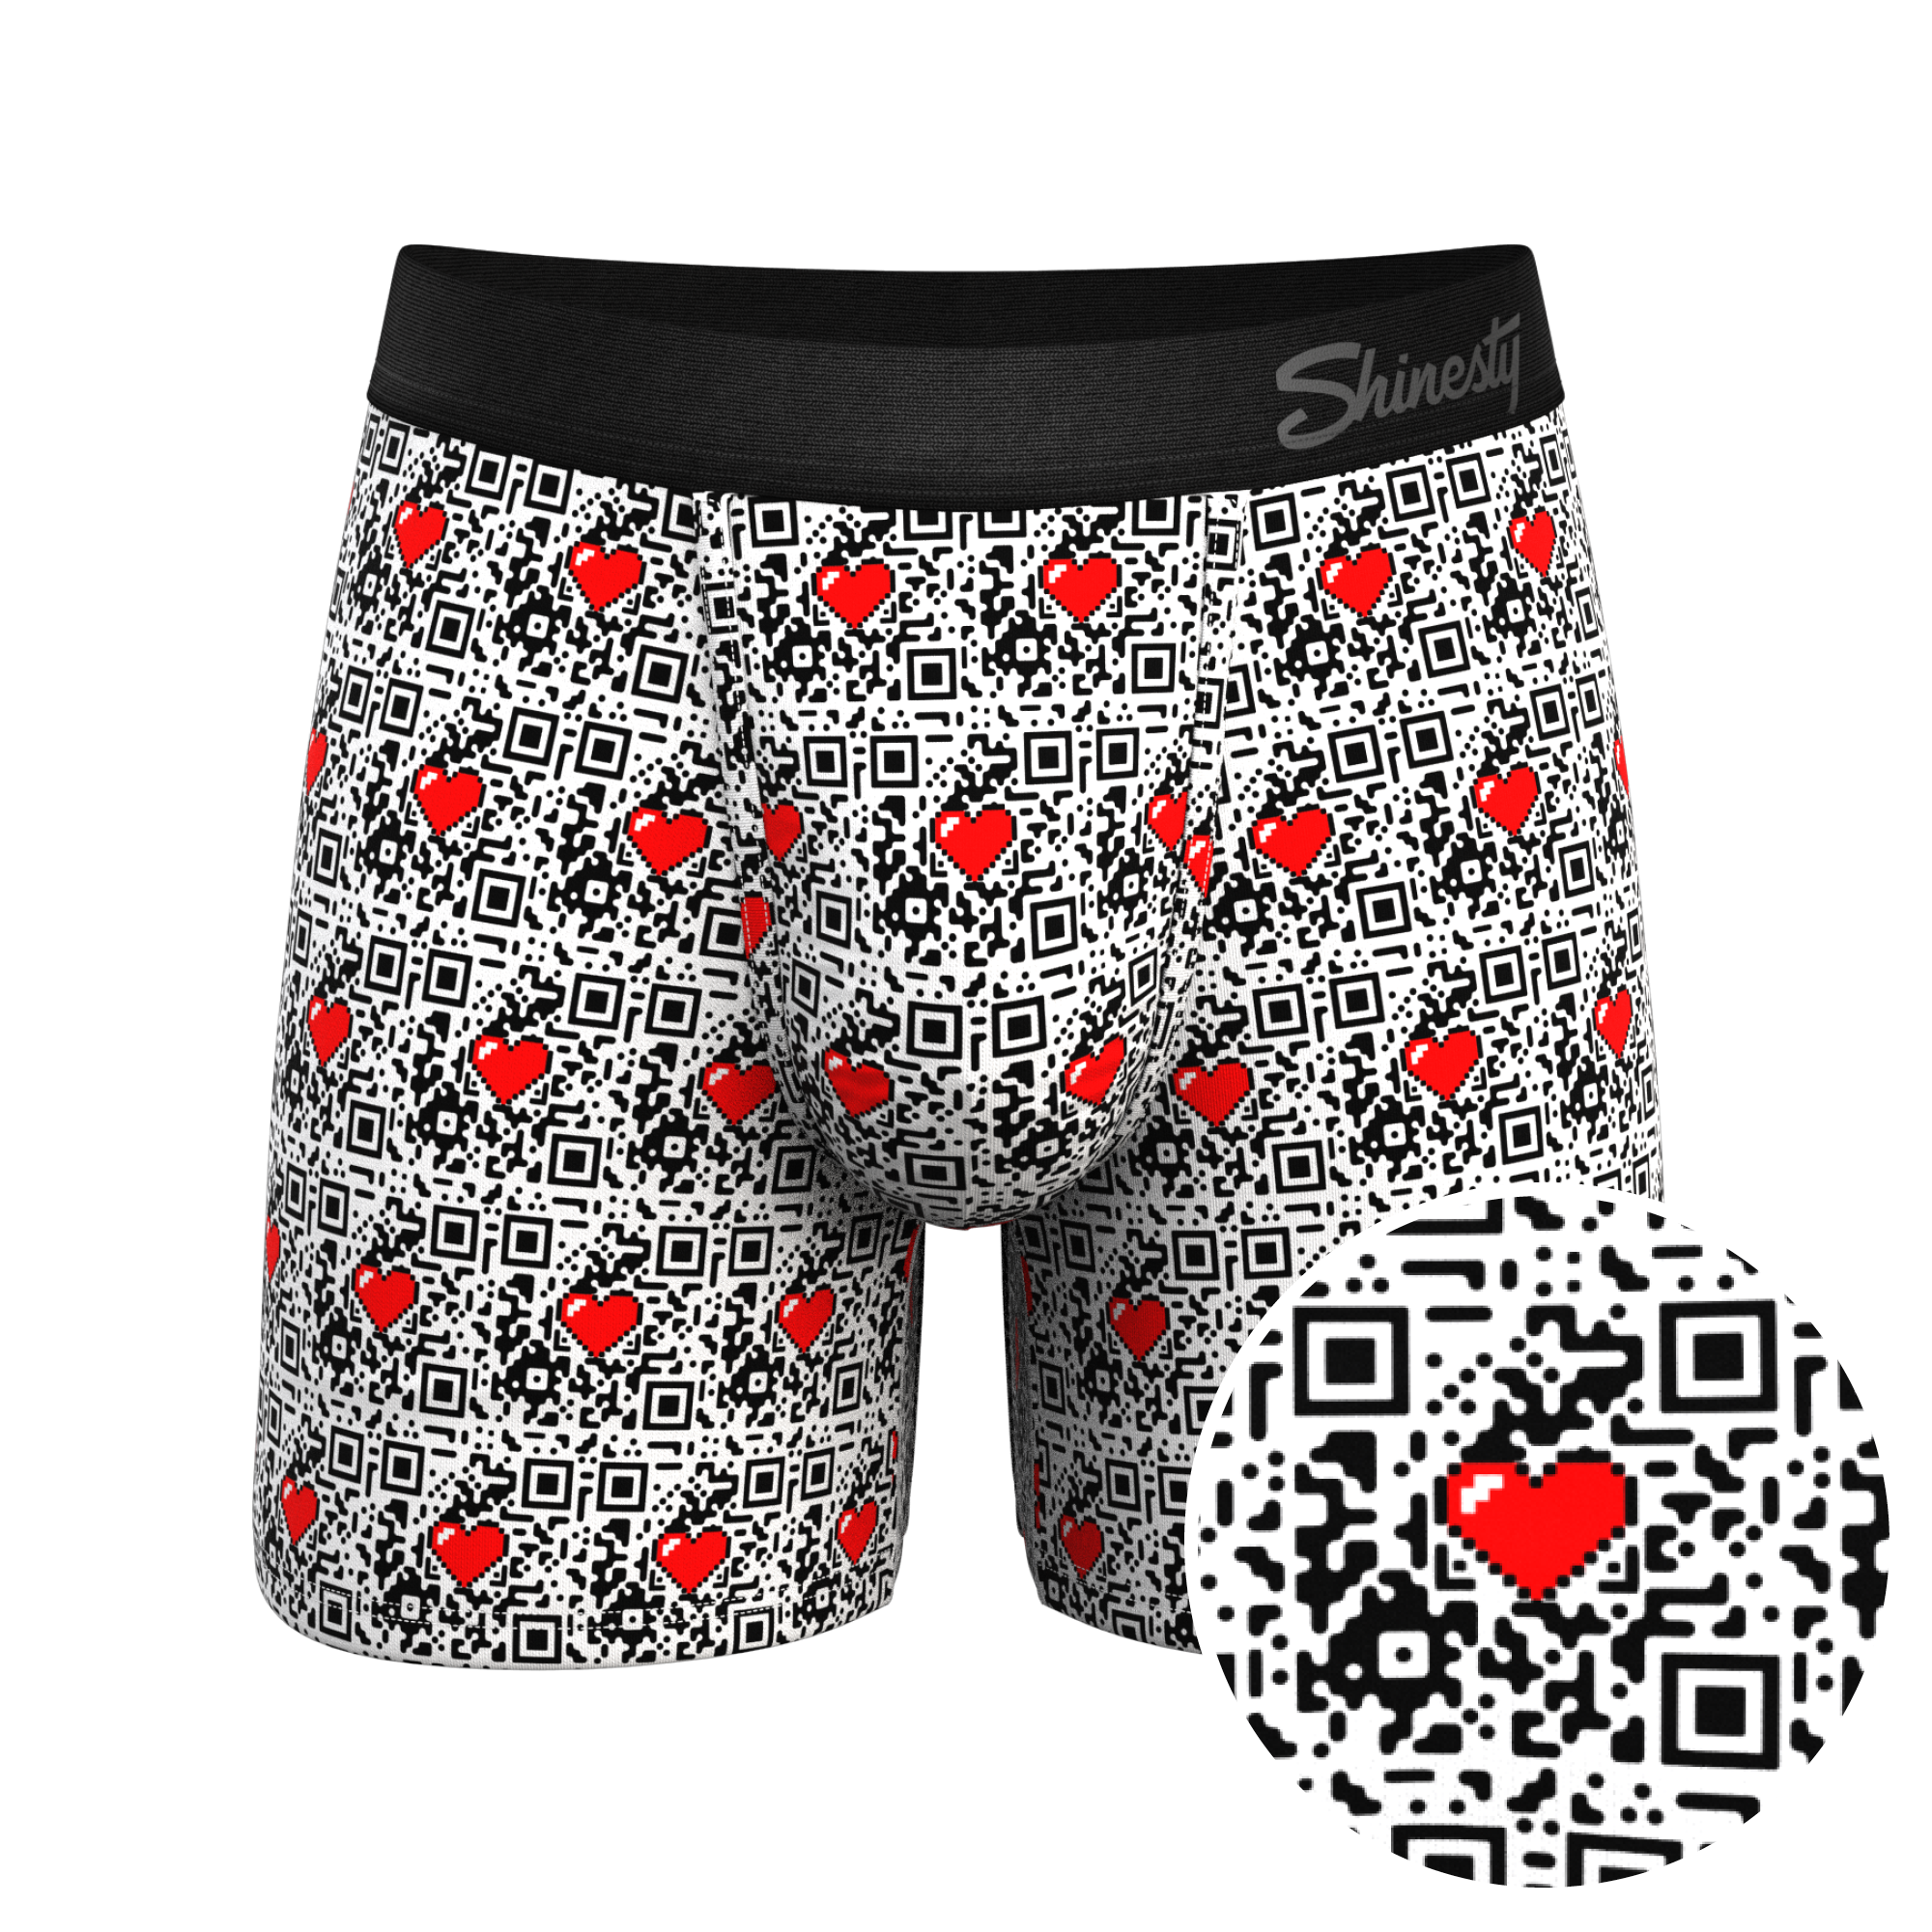 The Scan Me | QR Code Ball Hammock® Pouch Underwear